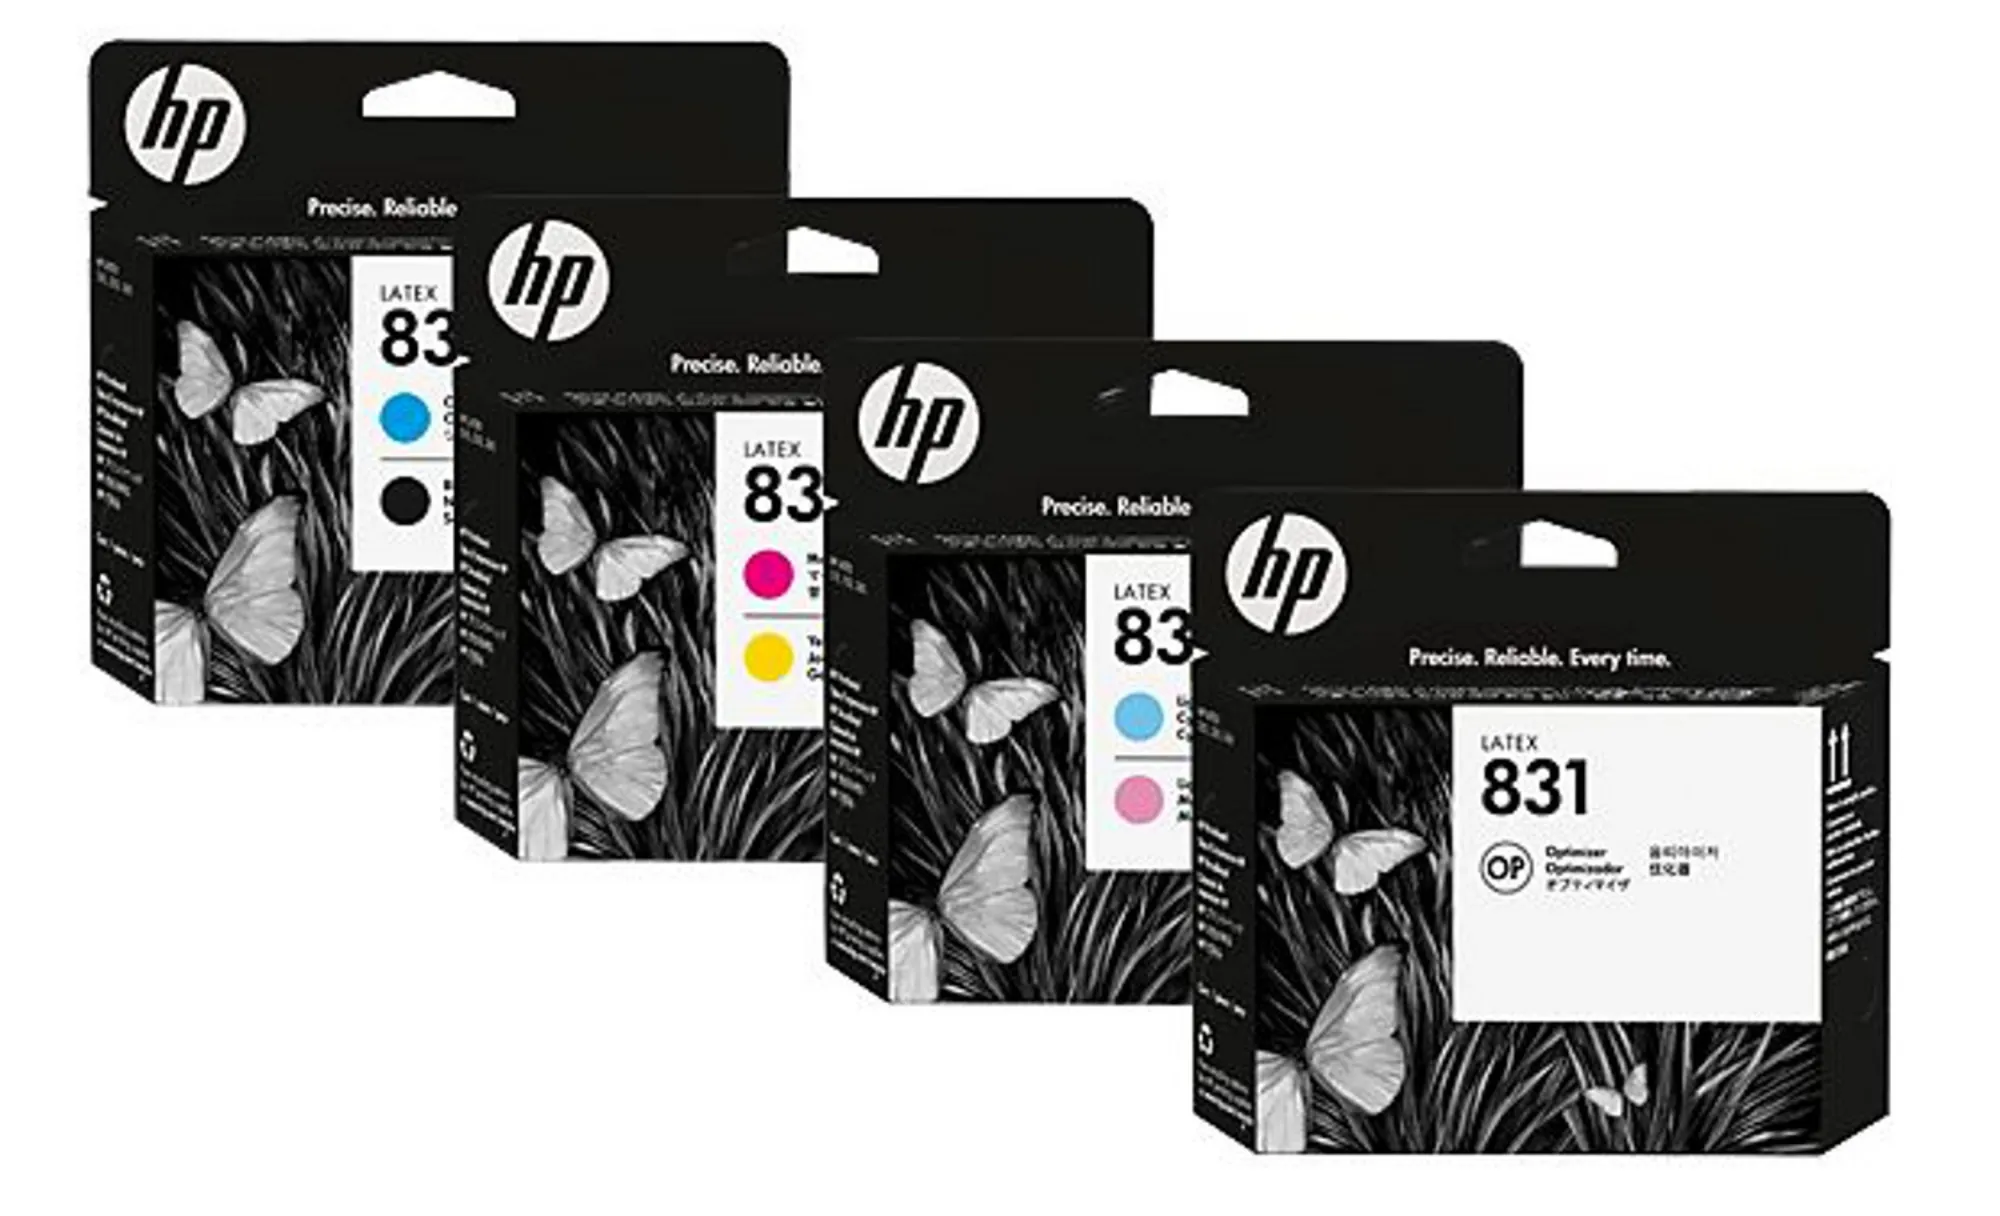 HP 831 Latex Printhead